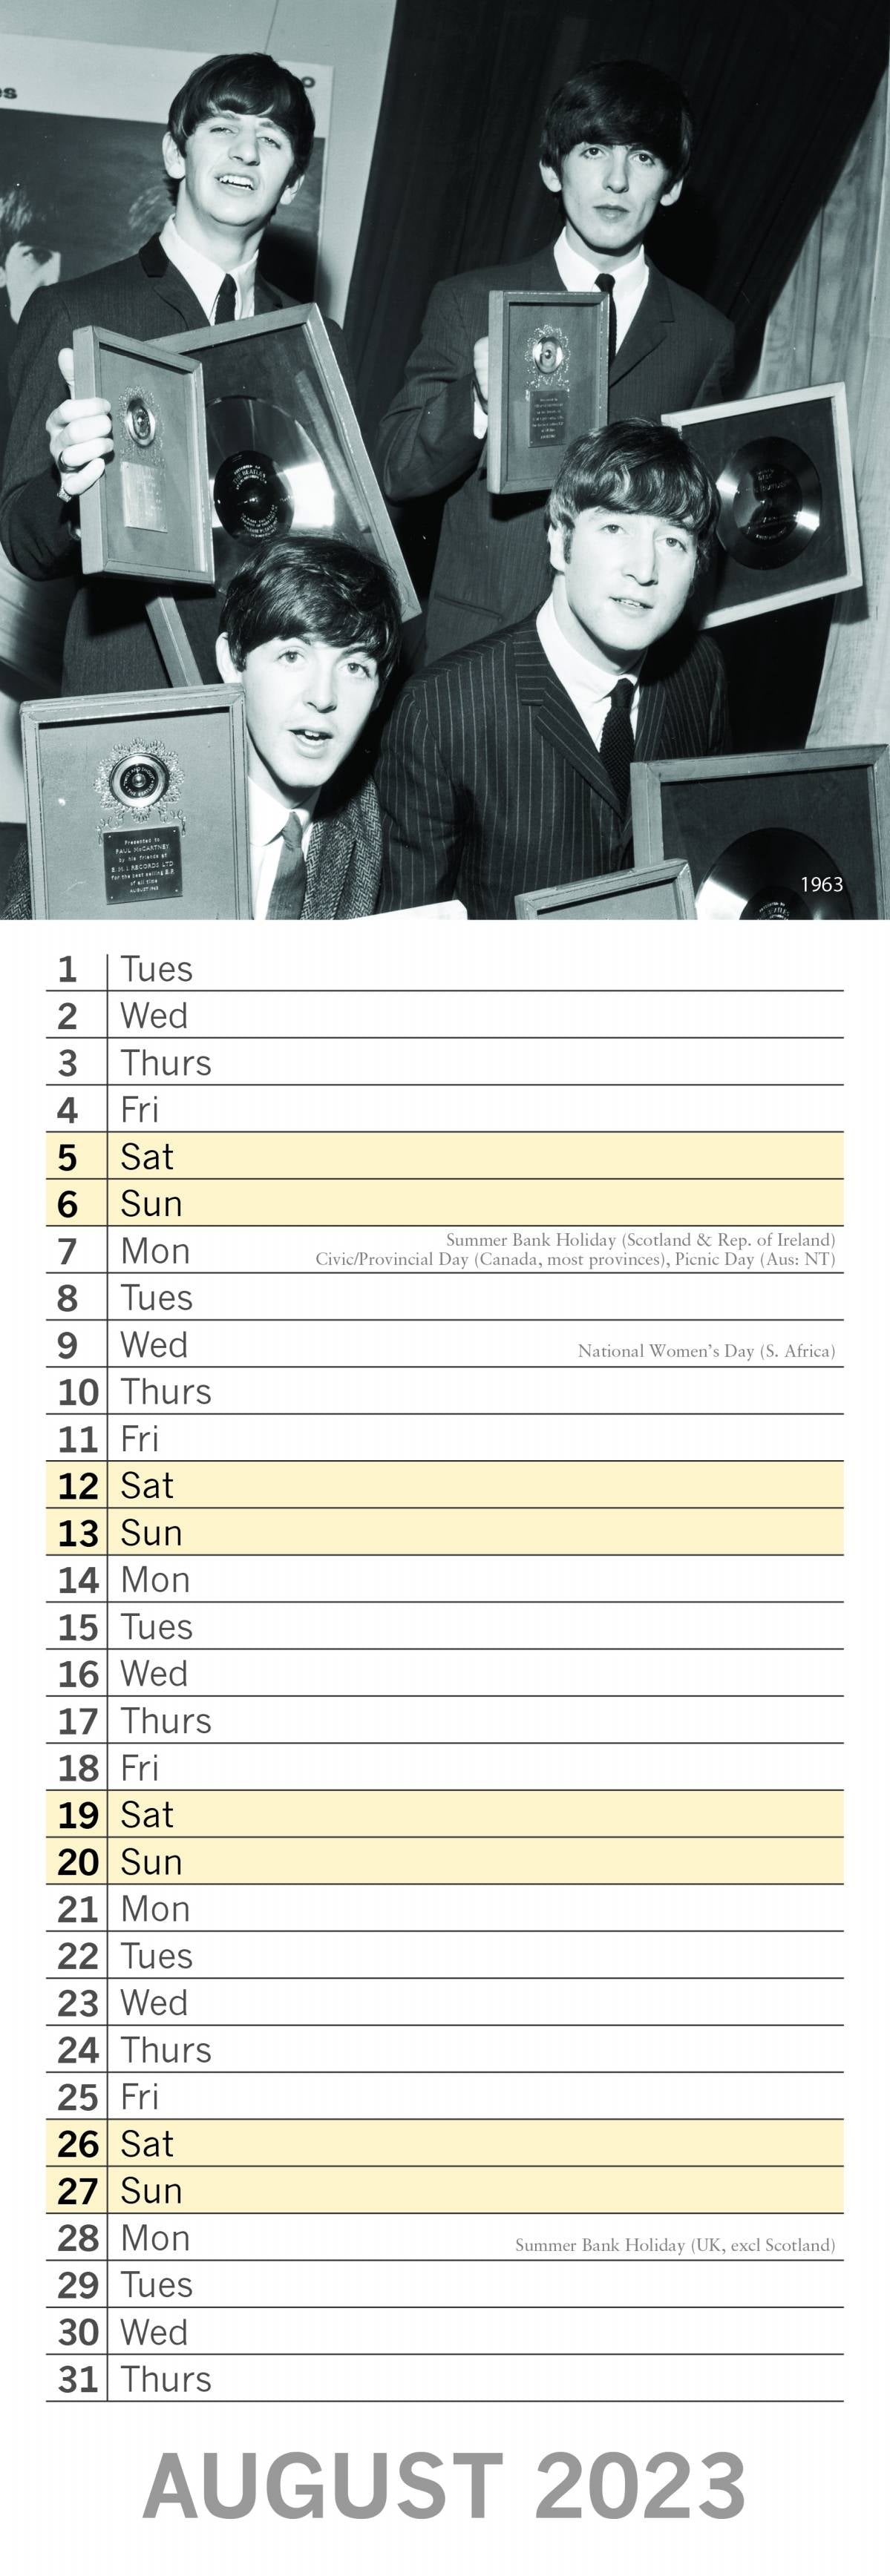 2023 The Beatles - Slim Wall Calendar